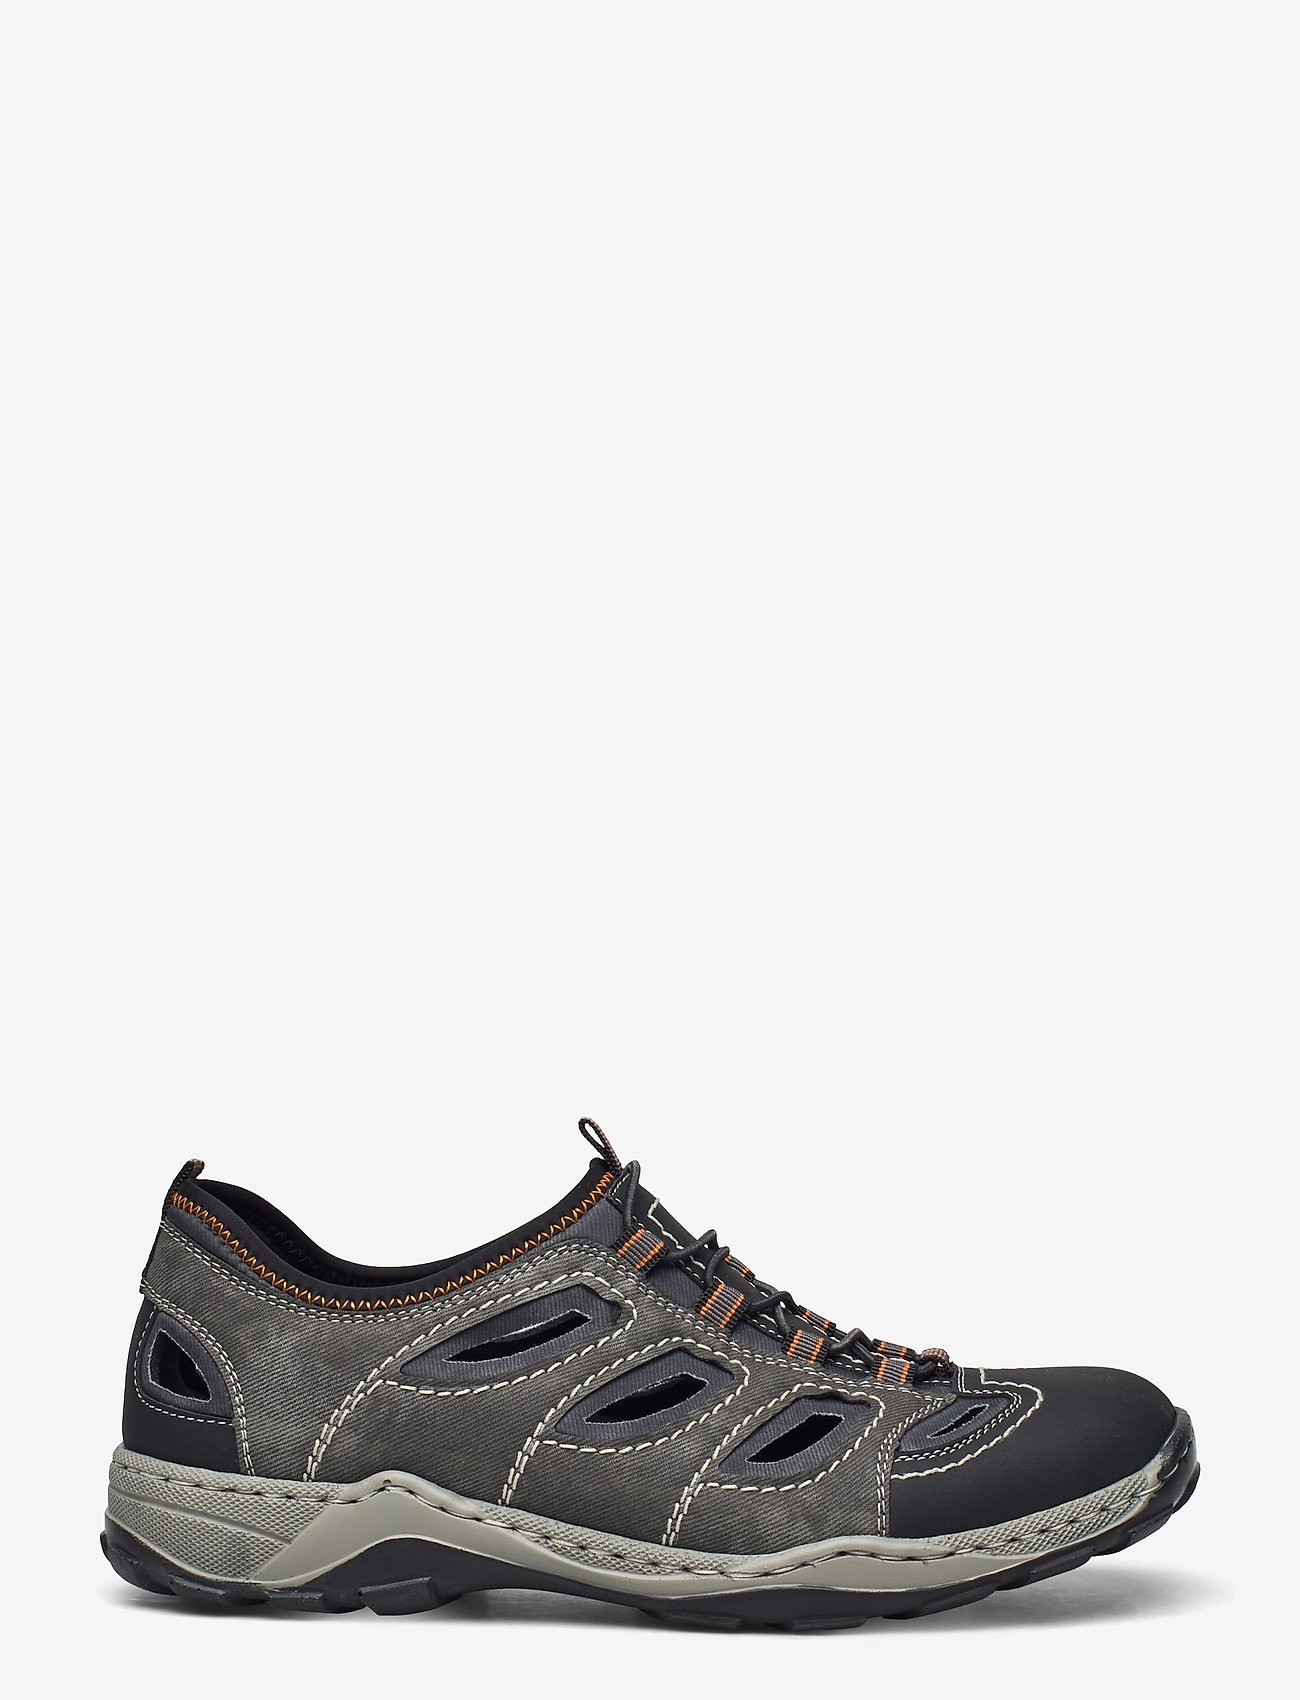 Rieker - 08065-02 - slip-on sneakers - grey combination - 1